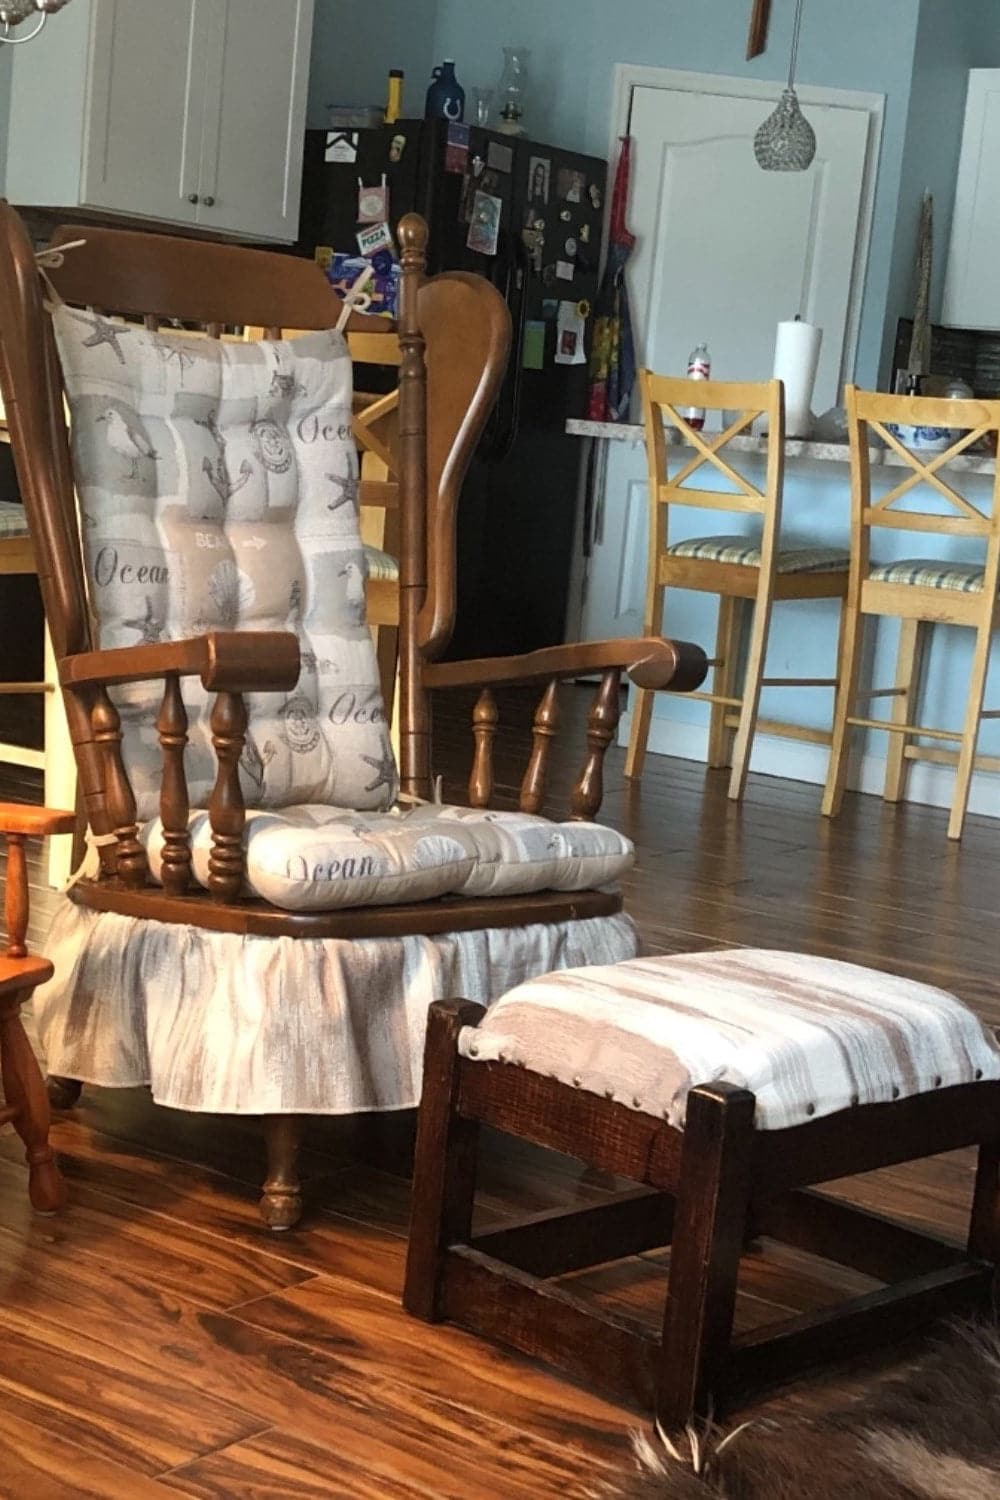 Gulls Point Rocking Chair Cushions - Barnett Home Decor - Beige, Grey, & White - Coastal - Oceanic